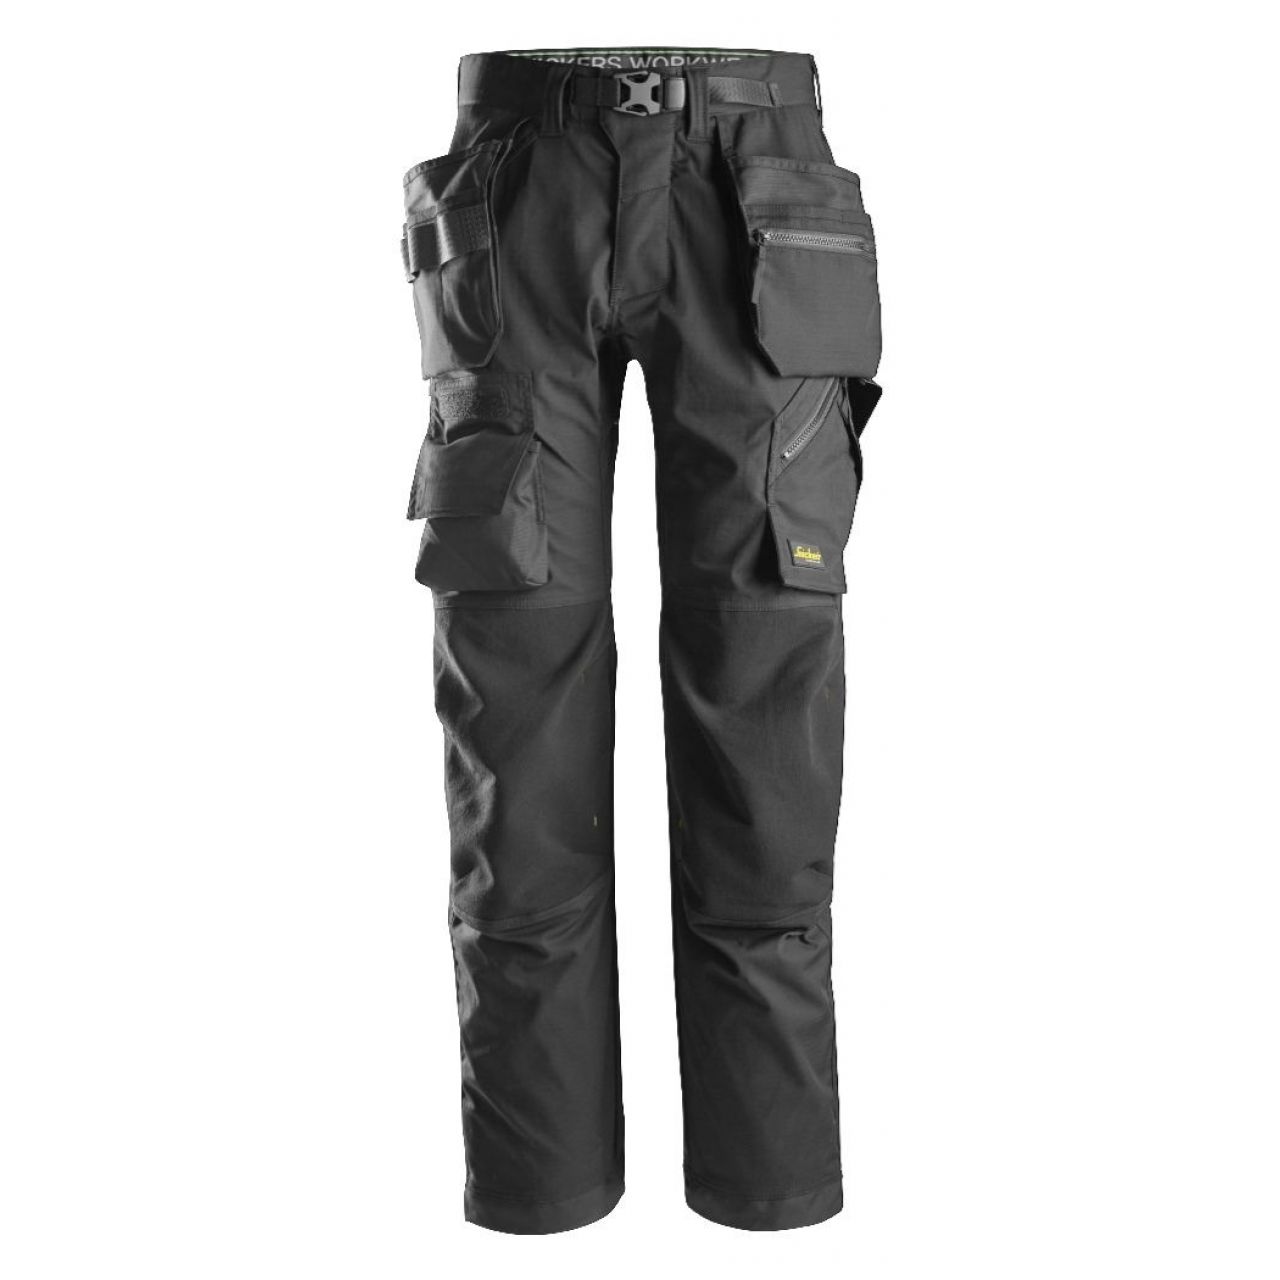 Pantalon solador FlexiWork+ bolsillos flotantes negro talla 150